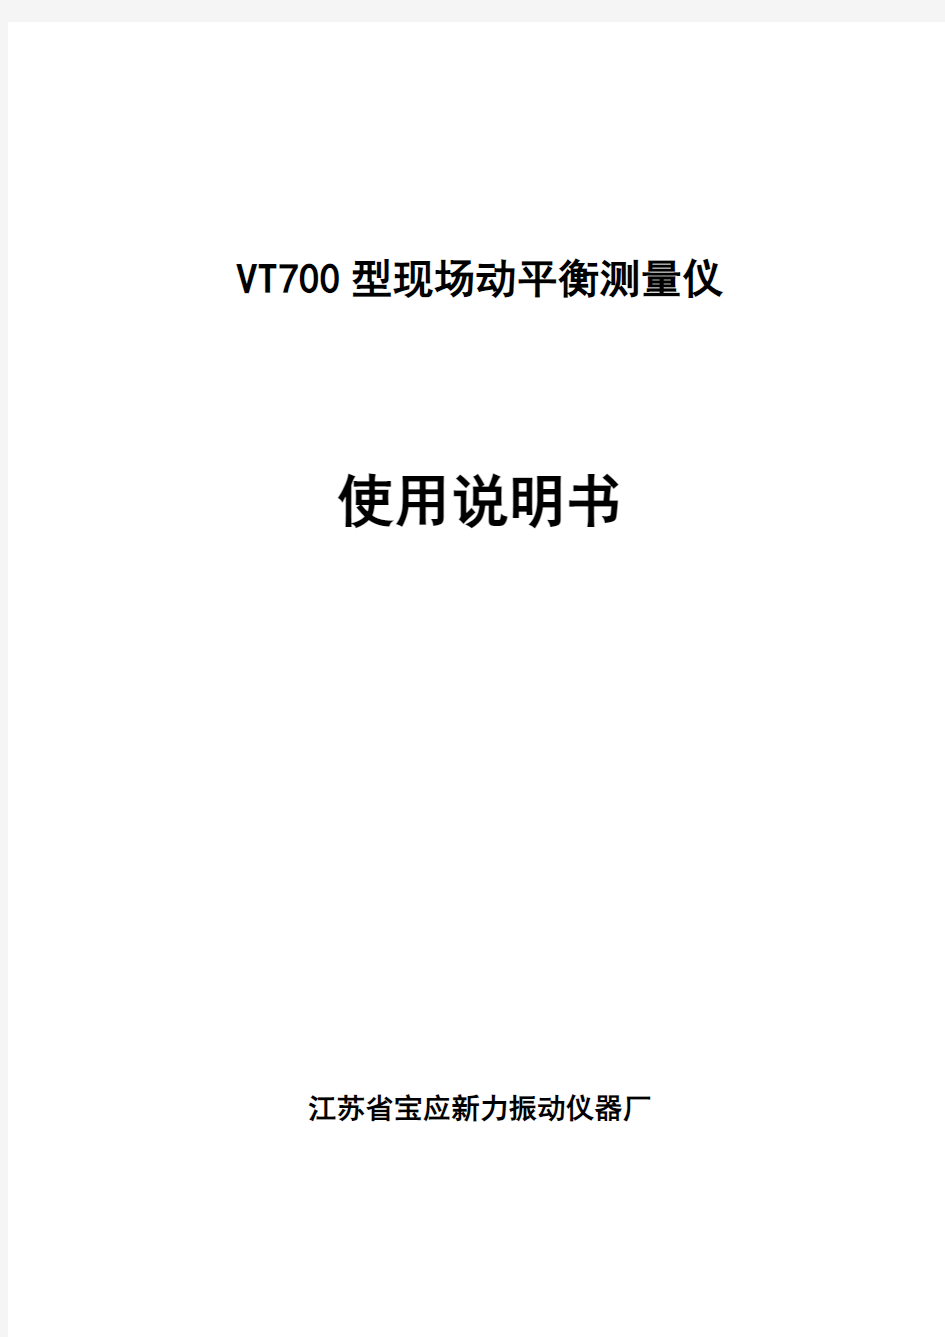 VT700动平衡仪说明书